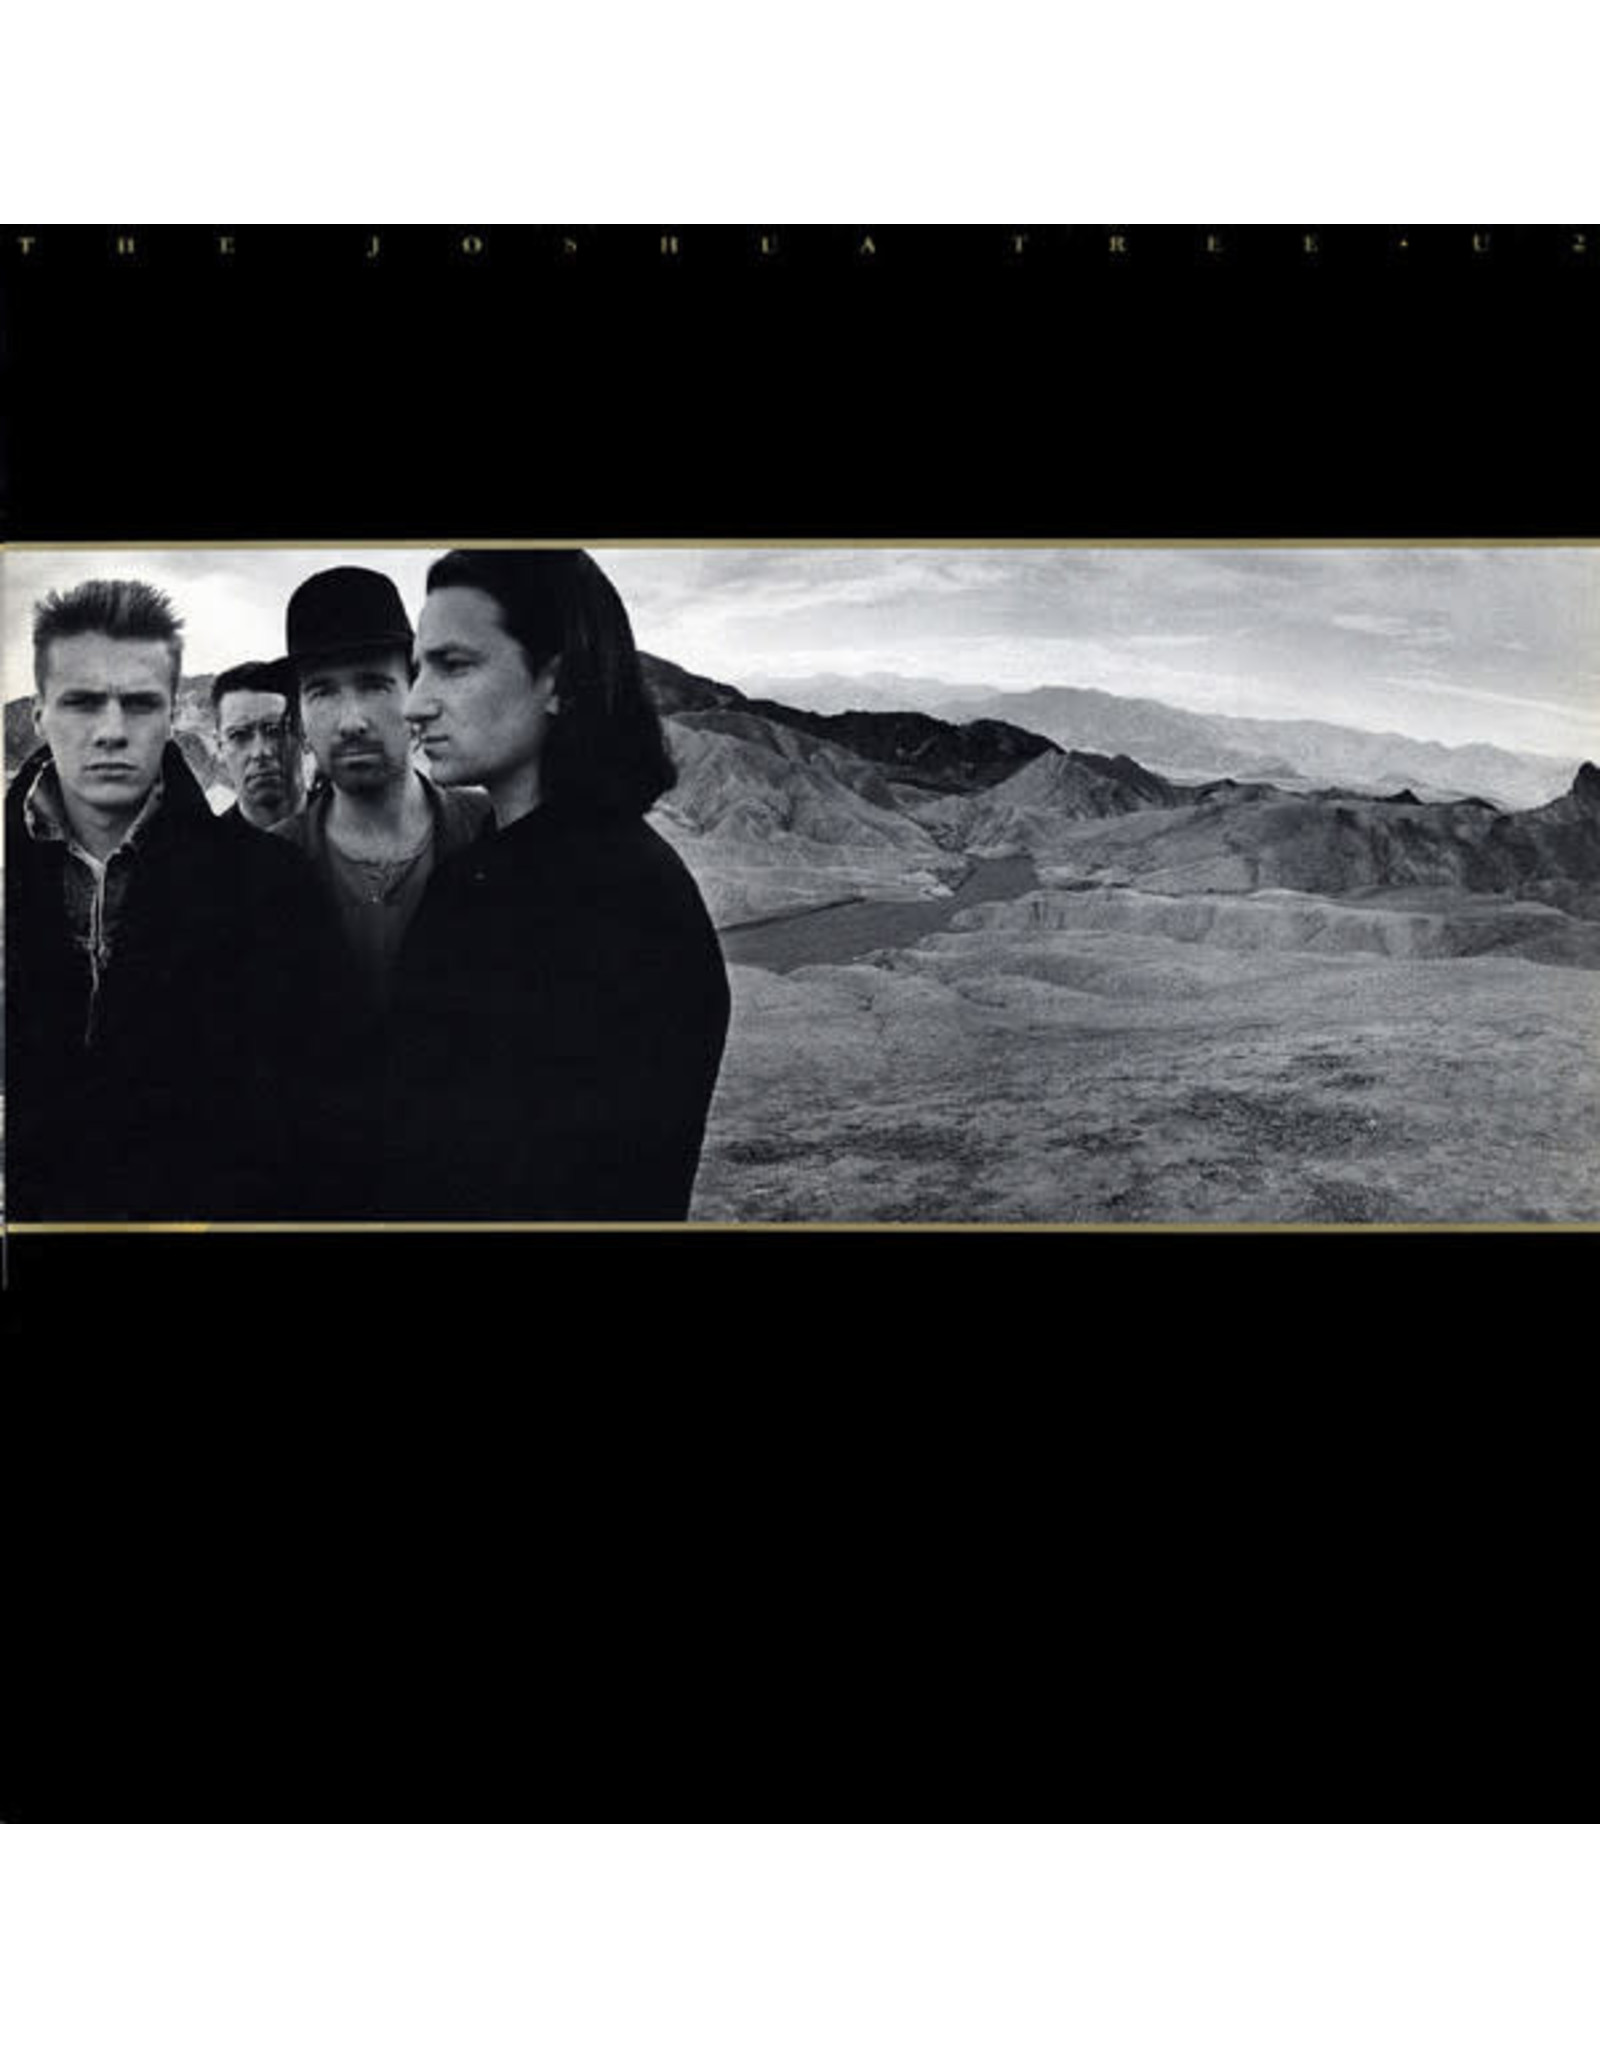 U2 - The Joshua Tree (30th Anniversary)